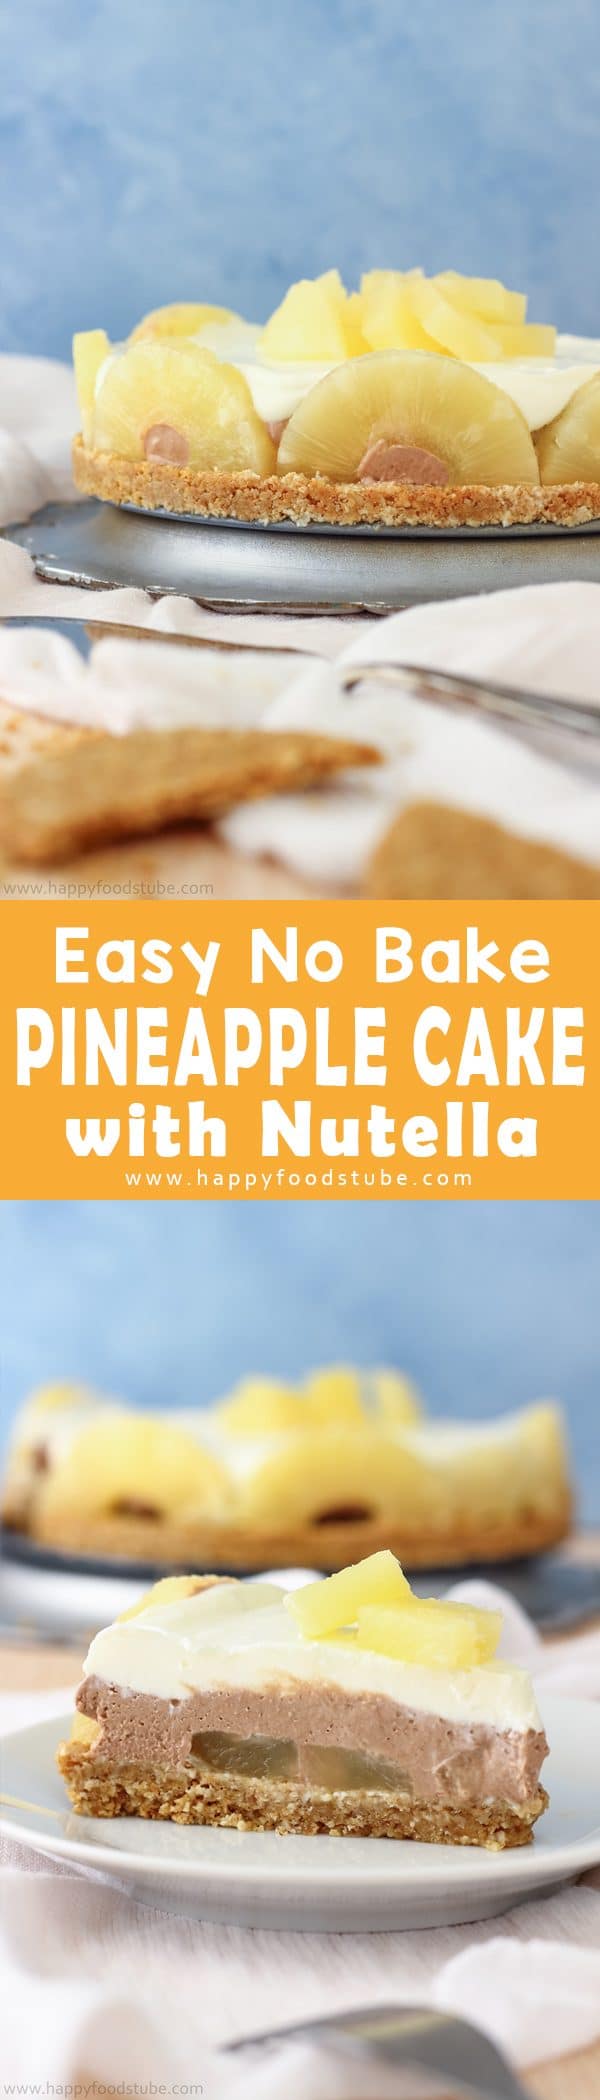 No Bake Pineapple Cake with Nutella Recipe Image